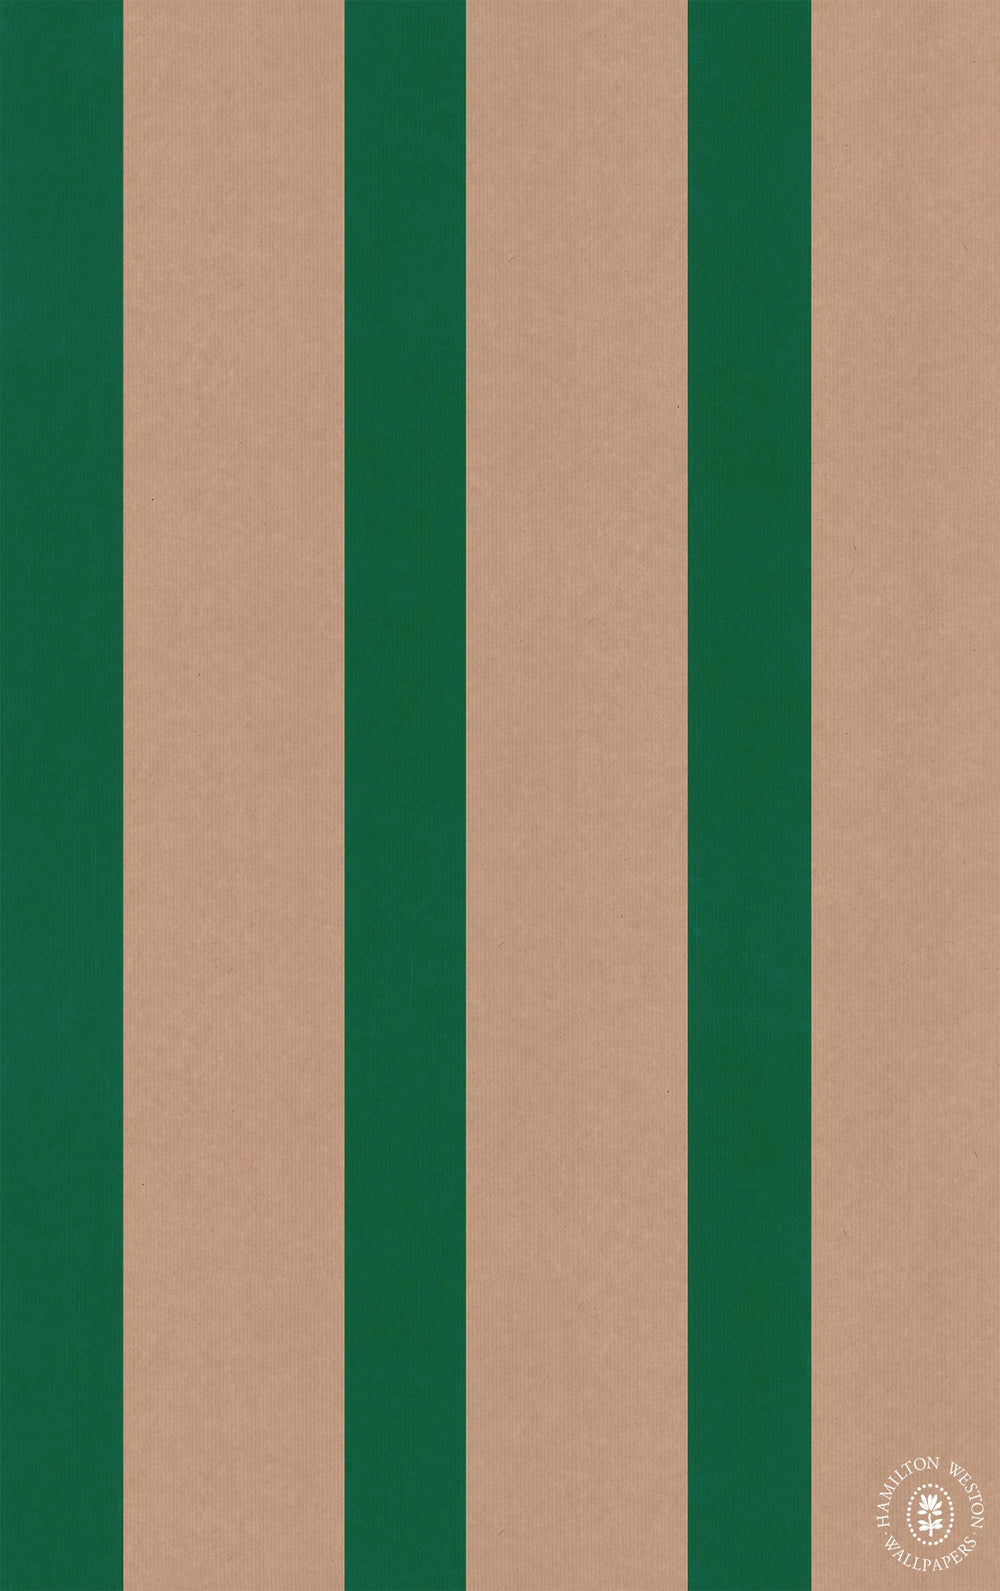 Hamilton-Weston-Wallpaper-Adam-Bray-Walls-Brown-Paper-stripe-solid-colour-stripes-brown-manilla-background-designer-printed-wallpaperHamilton-Weston-Wallpaper-Adam-Bray-Walls-Brown-Paper-stripe-solid-colour-stripes-brown-manilla-background-designer-printed-wallpaper